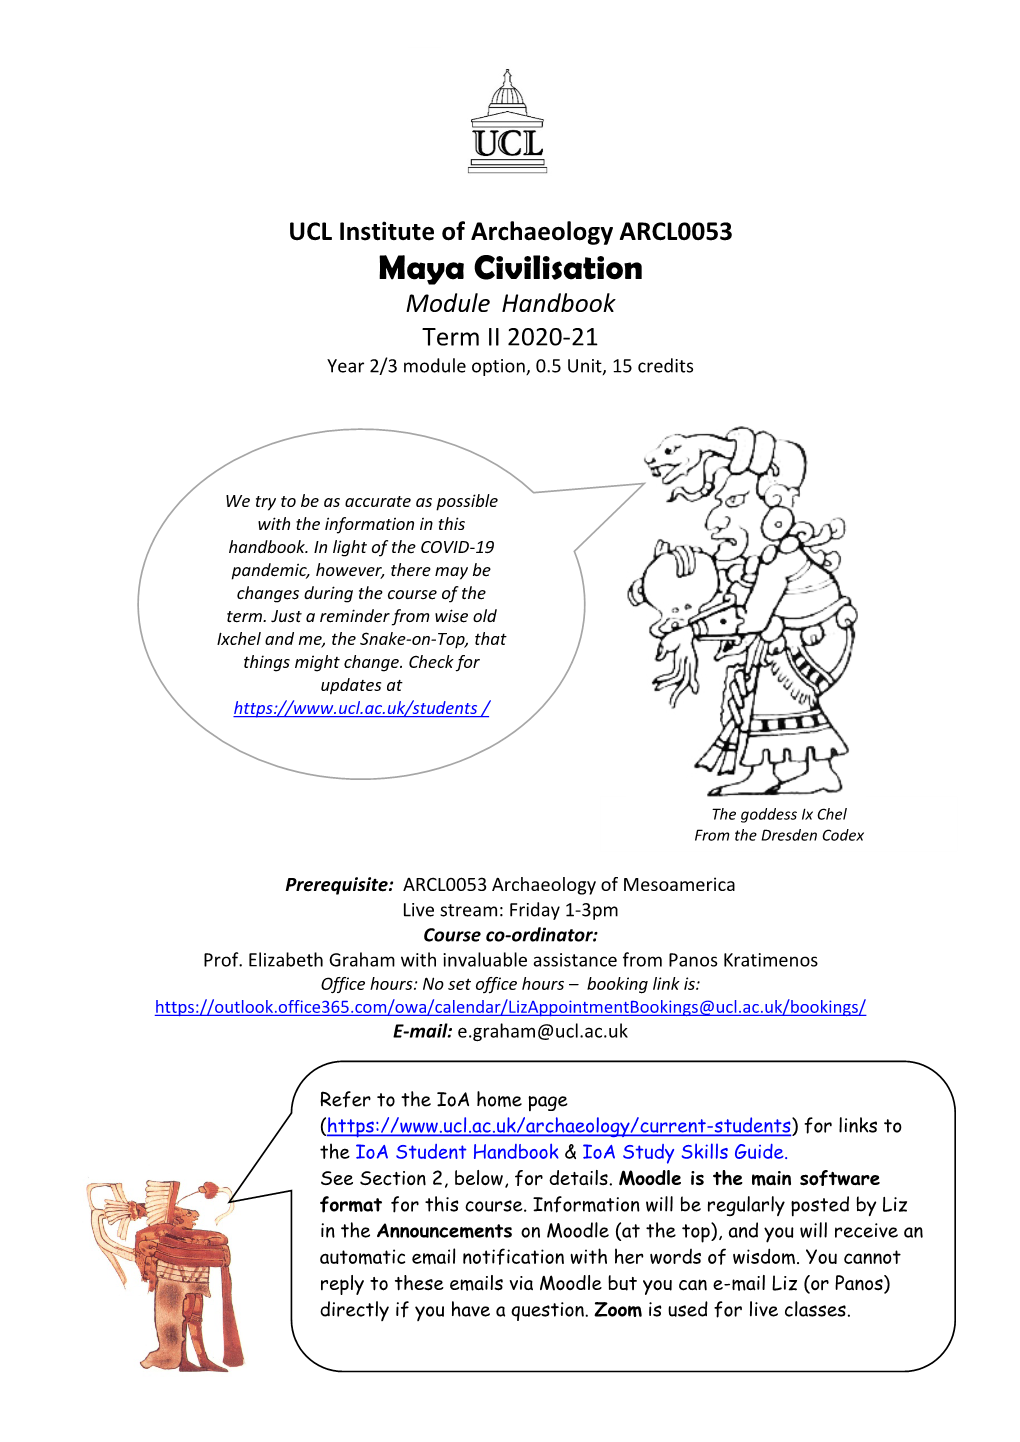 Maya Civilisation Module Handbook Term II 2020-21 Year 2/3 Module Option, 0.5 Unit, 15 Credits